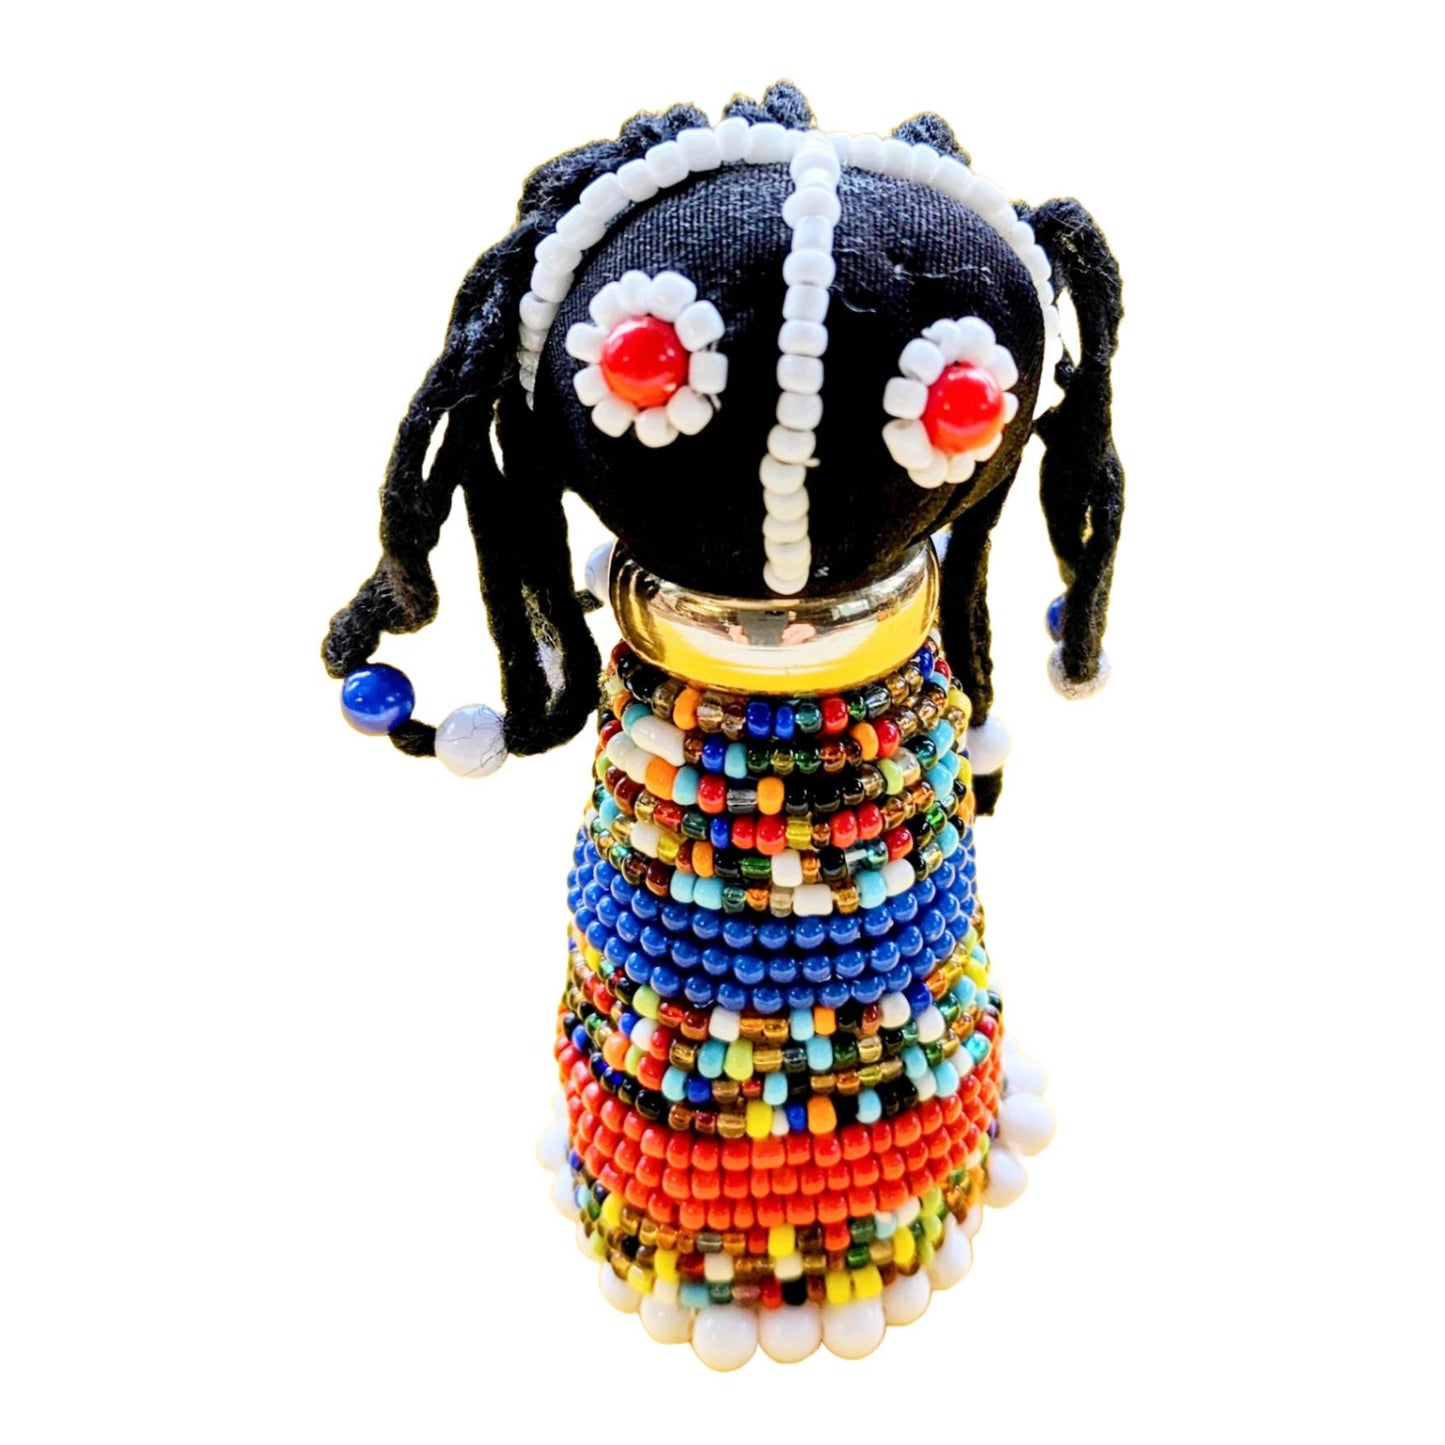 Ndebele Beaded "Sangoma" or Shaman Doll